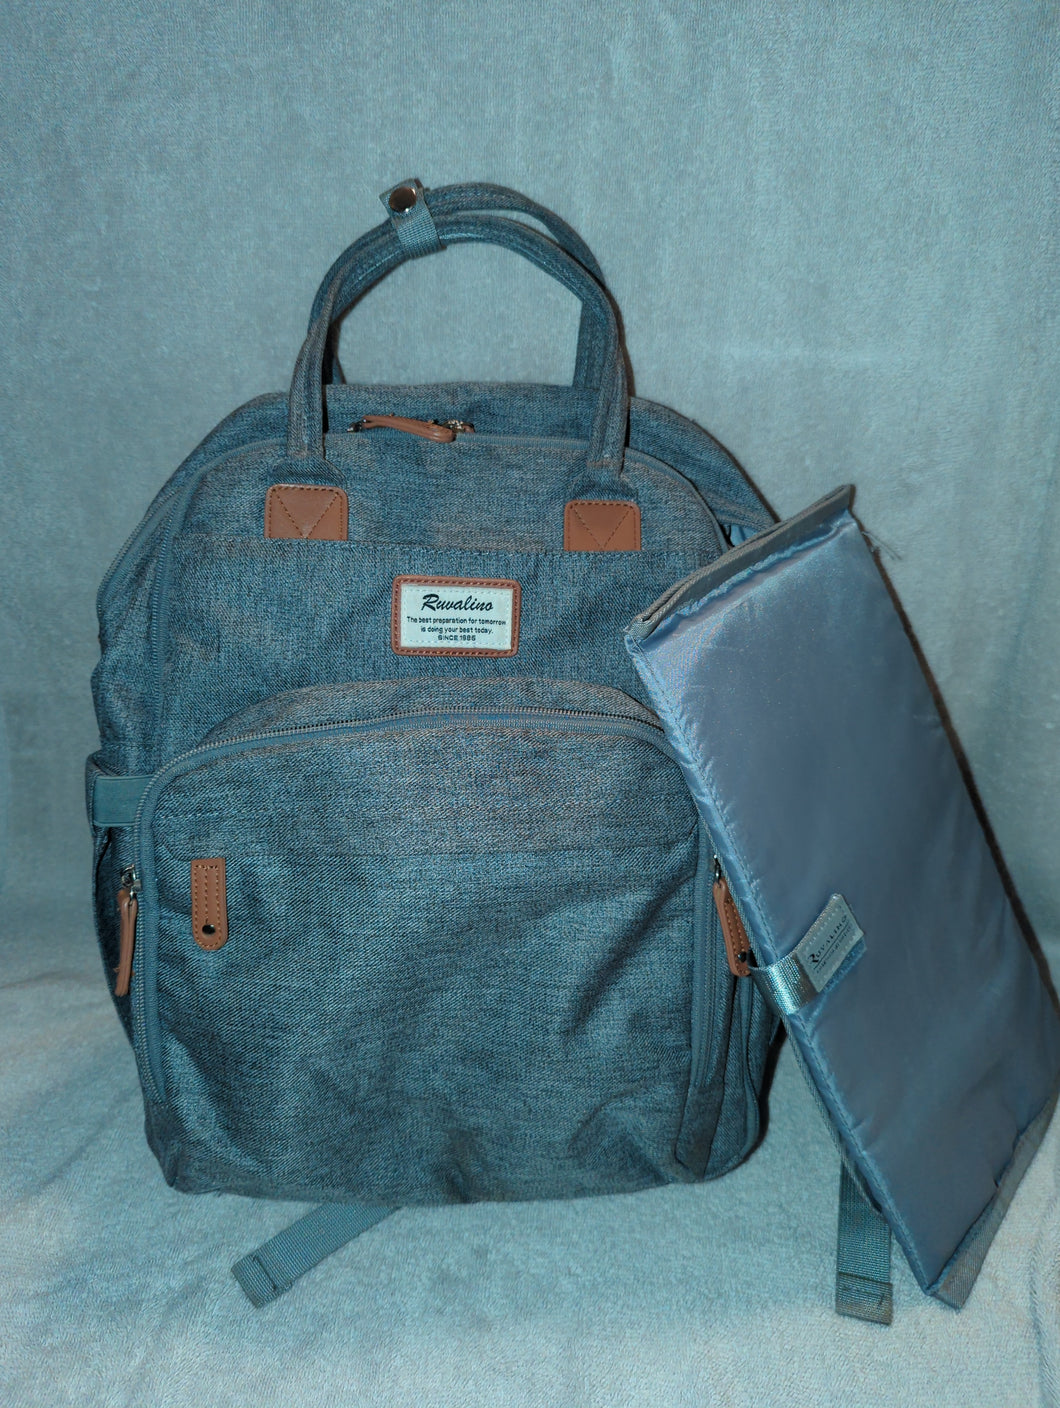 Ruvalino backpack style diaper bag